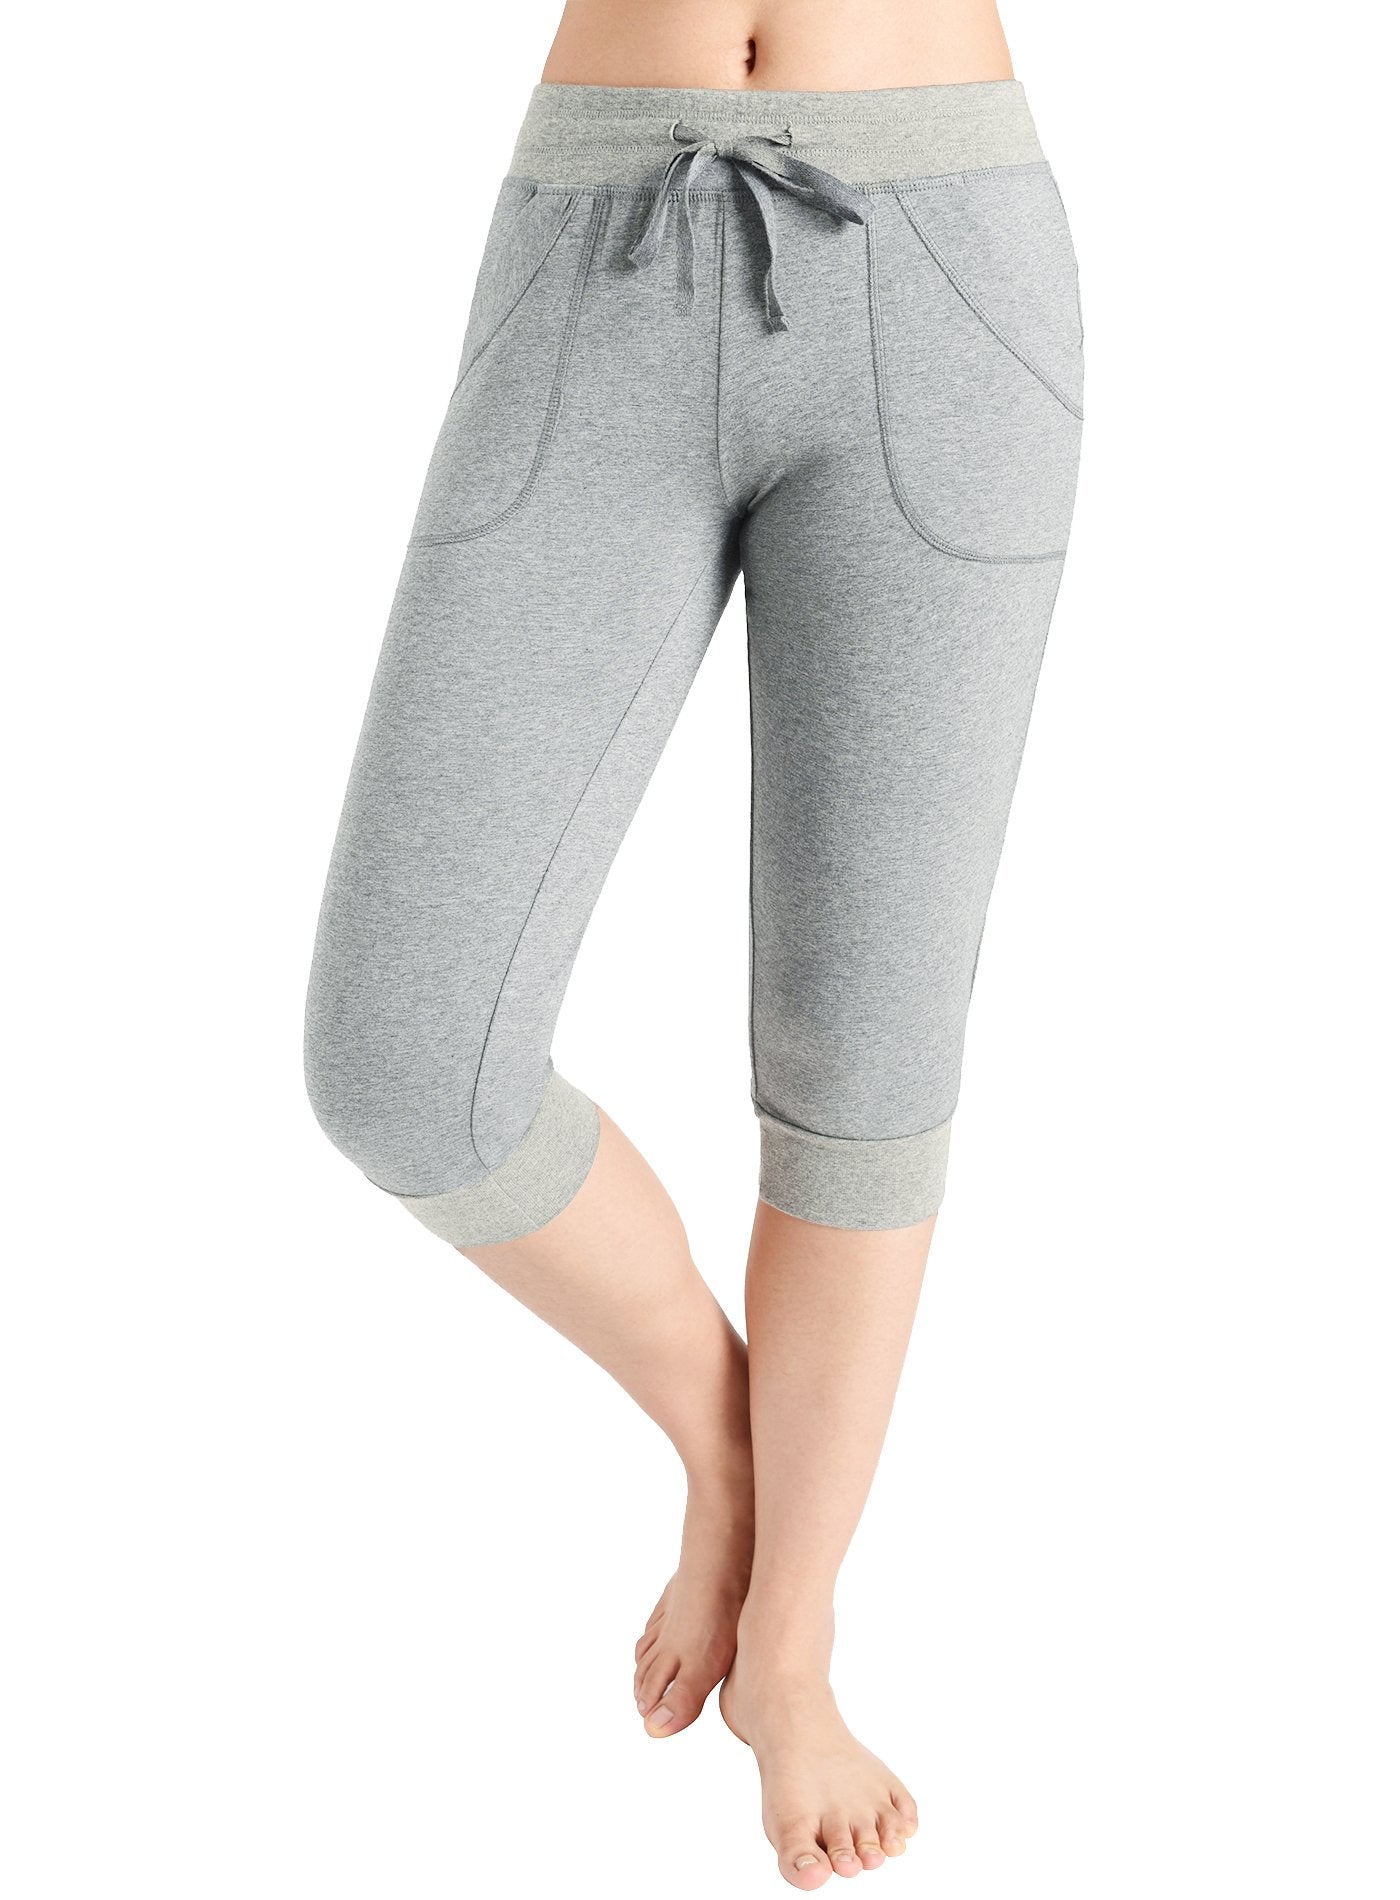 leggings for women cotton capri length : Conceited Premium Jeggings for  Women - Full and Capr... | Produit, Produits